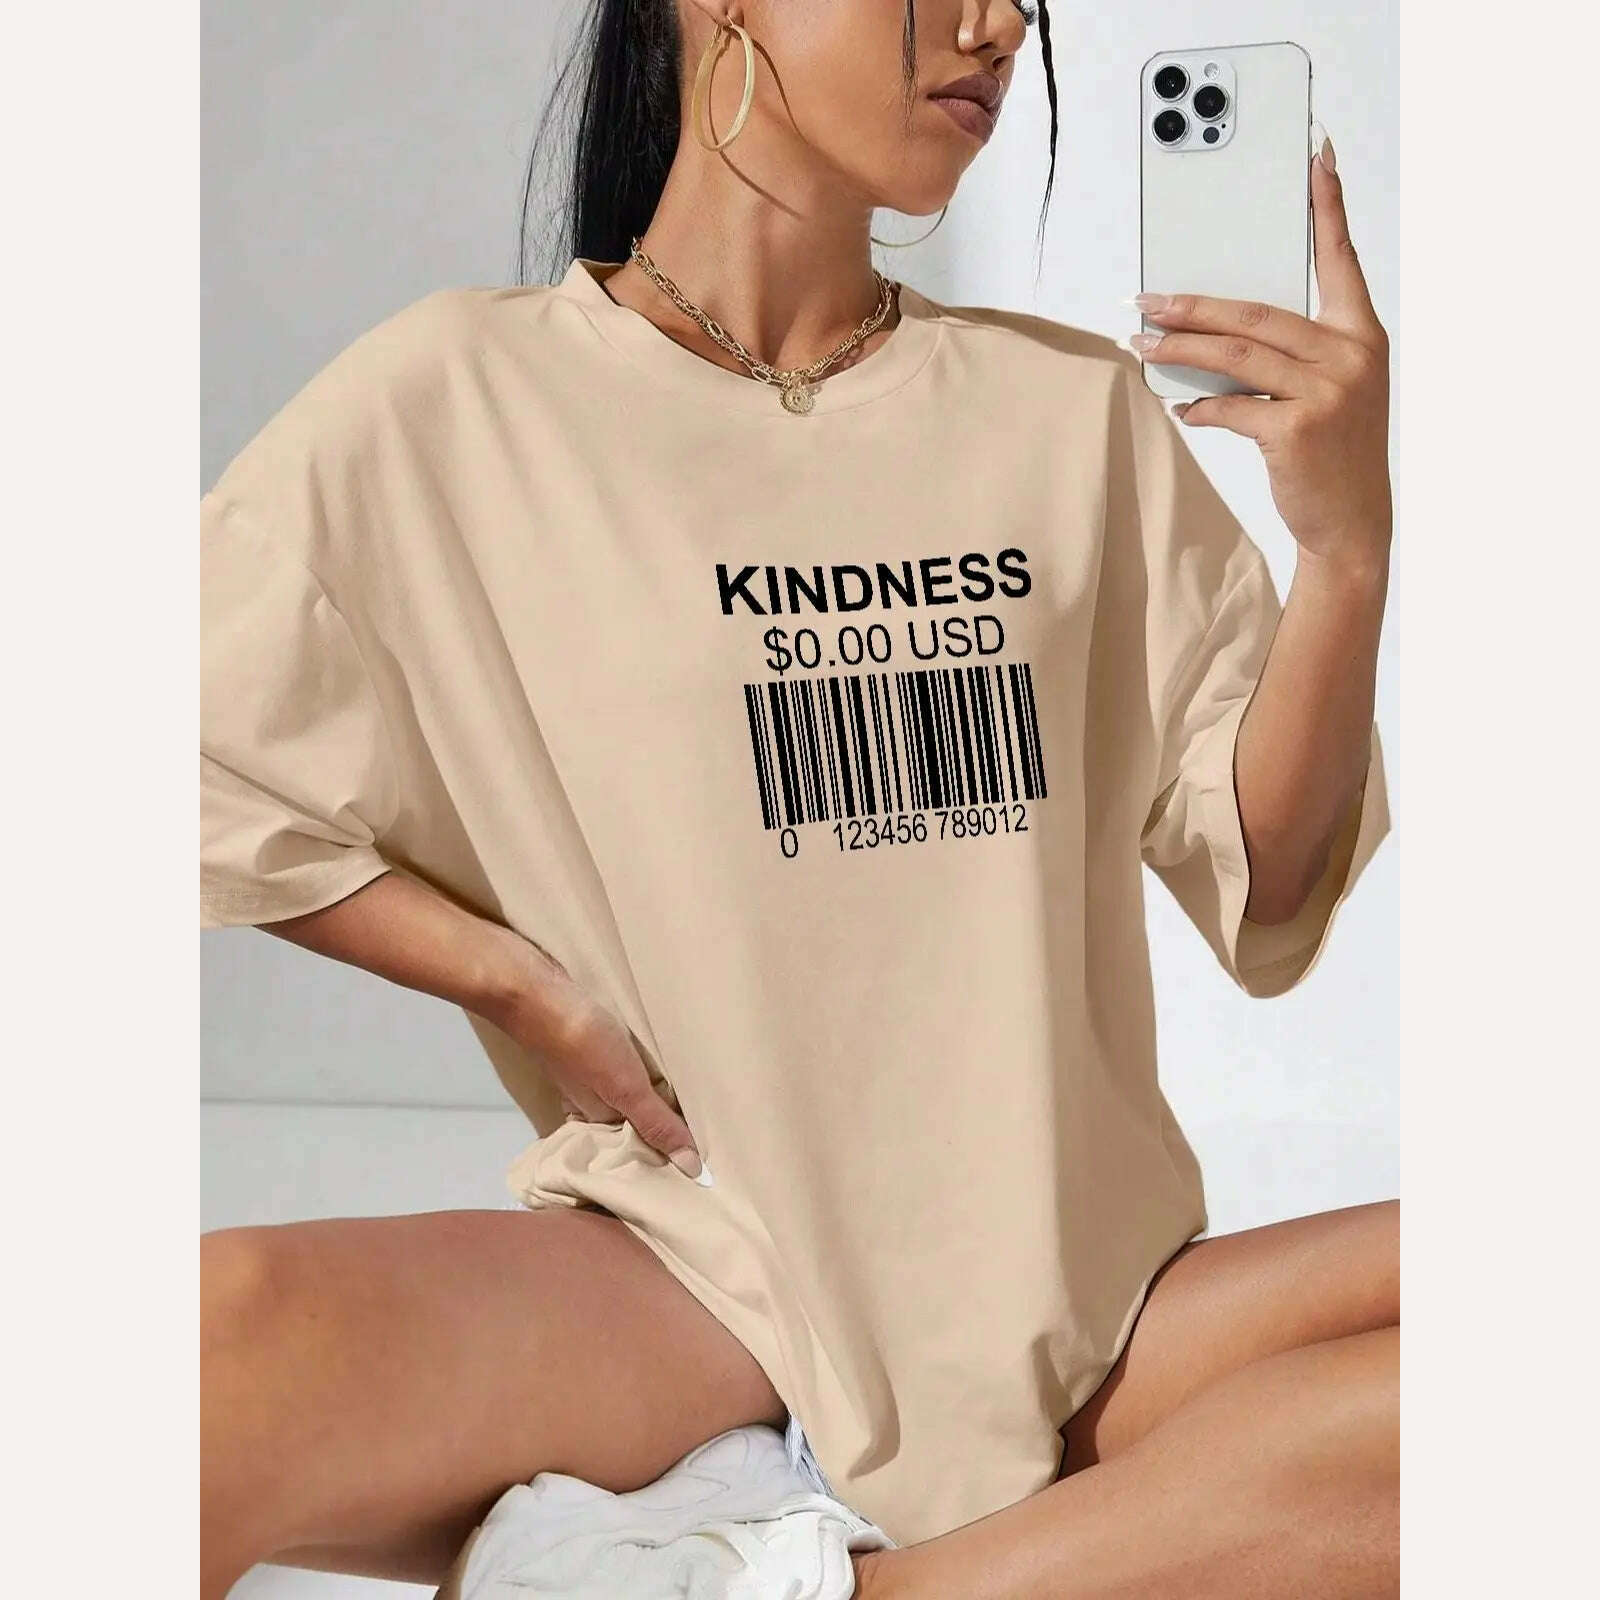 KIMLUD, Kindness Creative Bar Code Creativity Womens Short Sleeve Funny Casual Oversize Tops All-math Trend T-Shirts Woman Tee Clothing, Khaki / XL, KIMLUD Womens Clothes